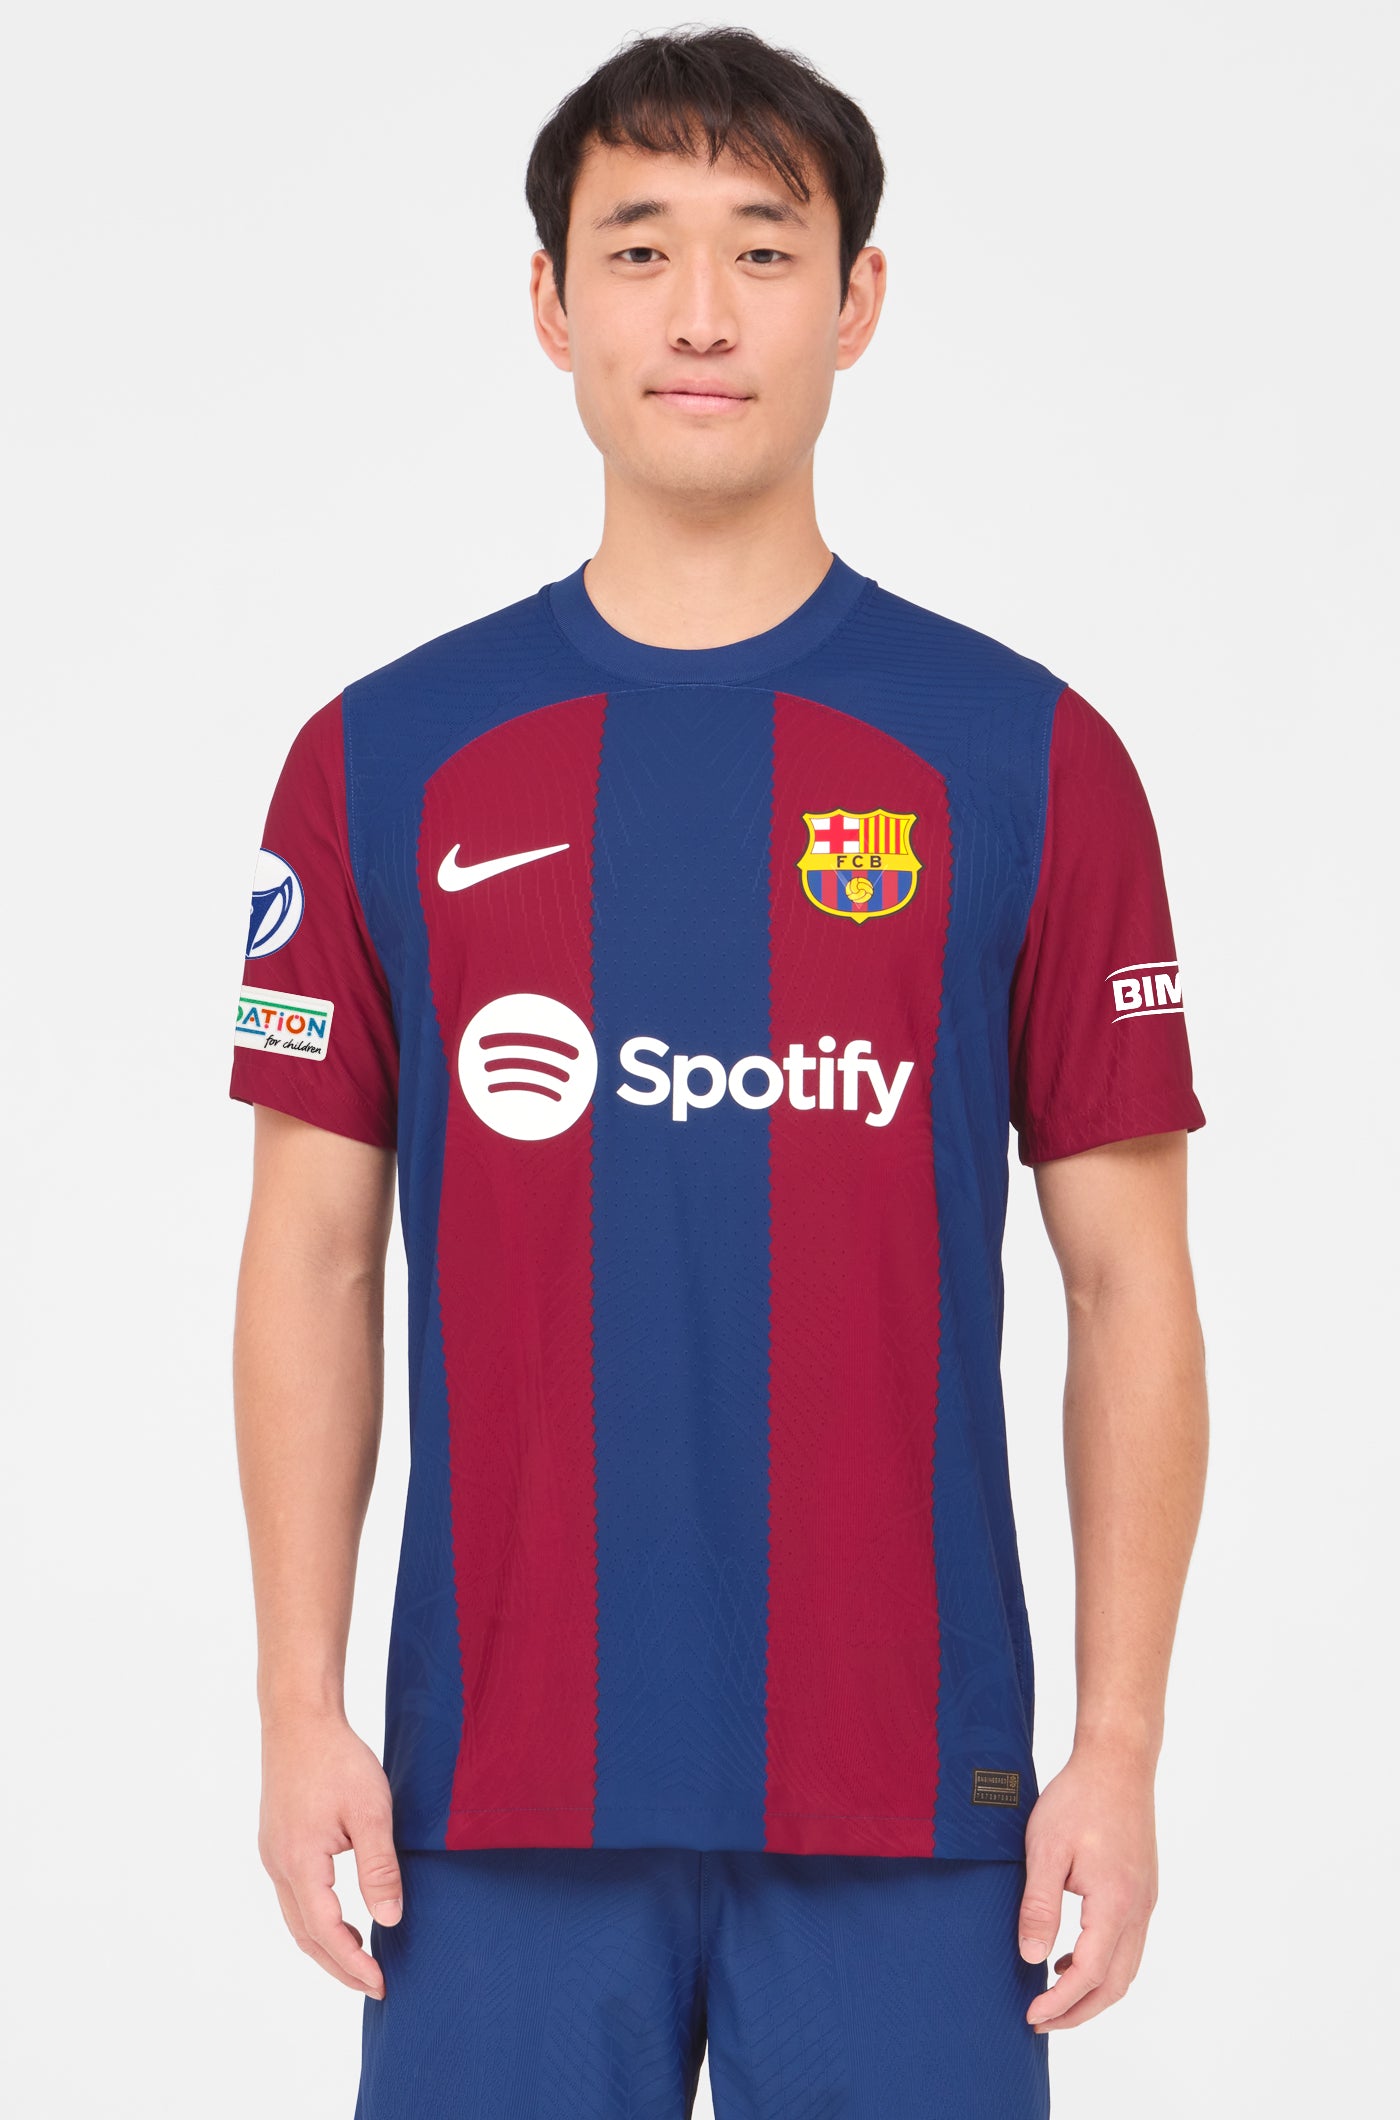 UWCL FC Barcelona home shirt 23/24 Player's Edition  - BRUNA